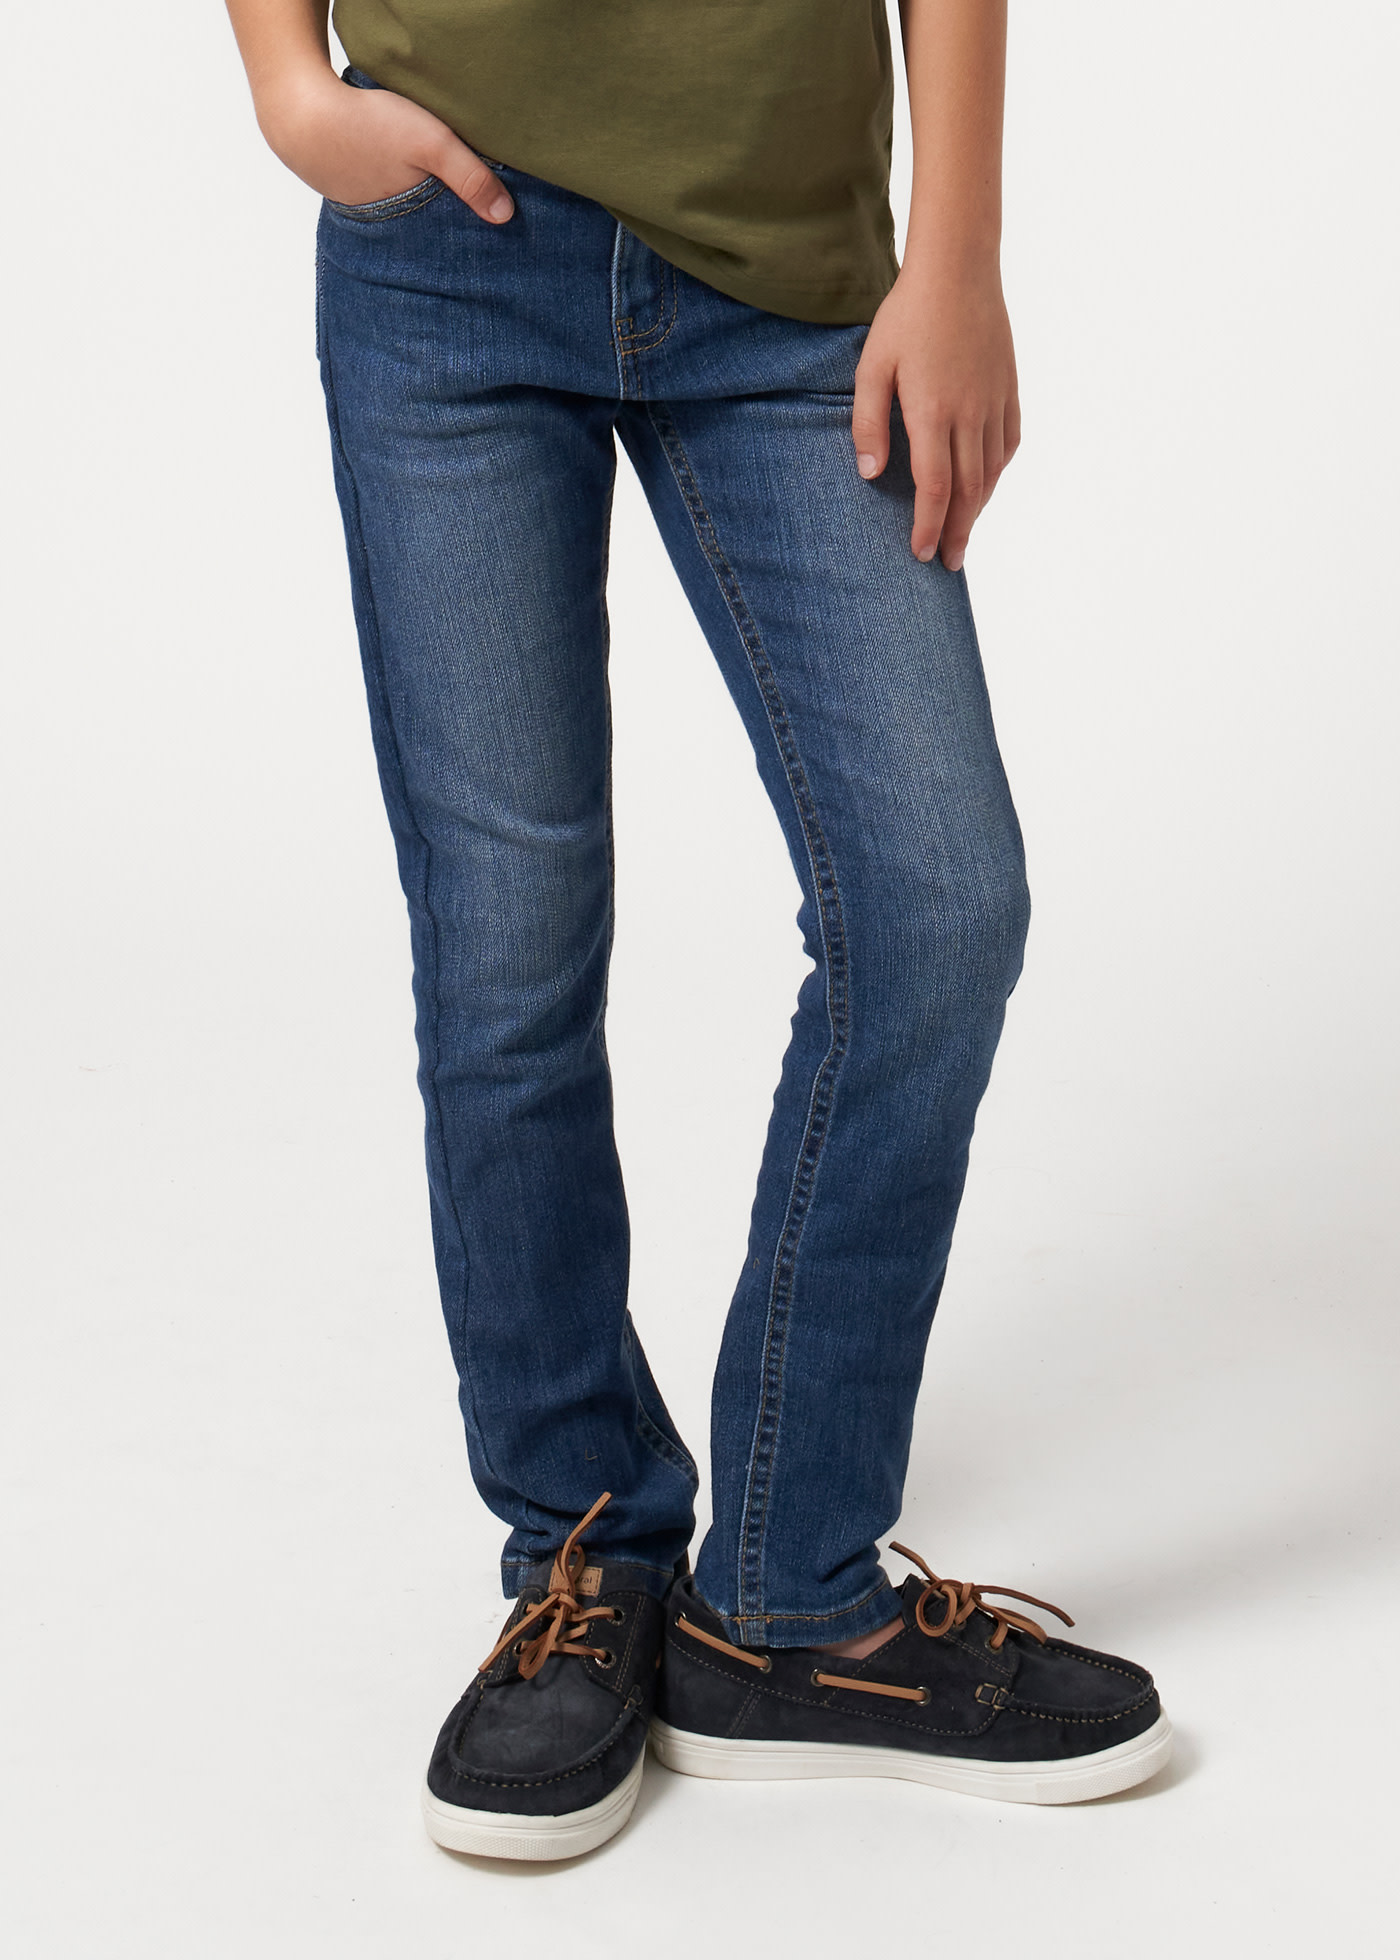 Pantalone jeans slim fit Better Cotton ragazzo